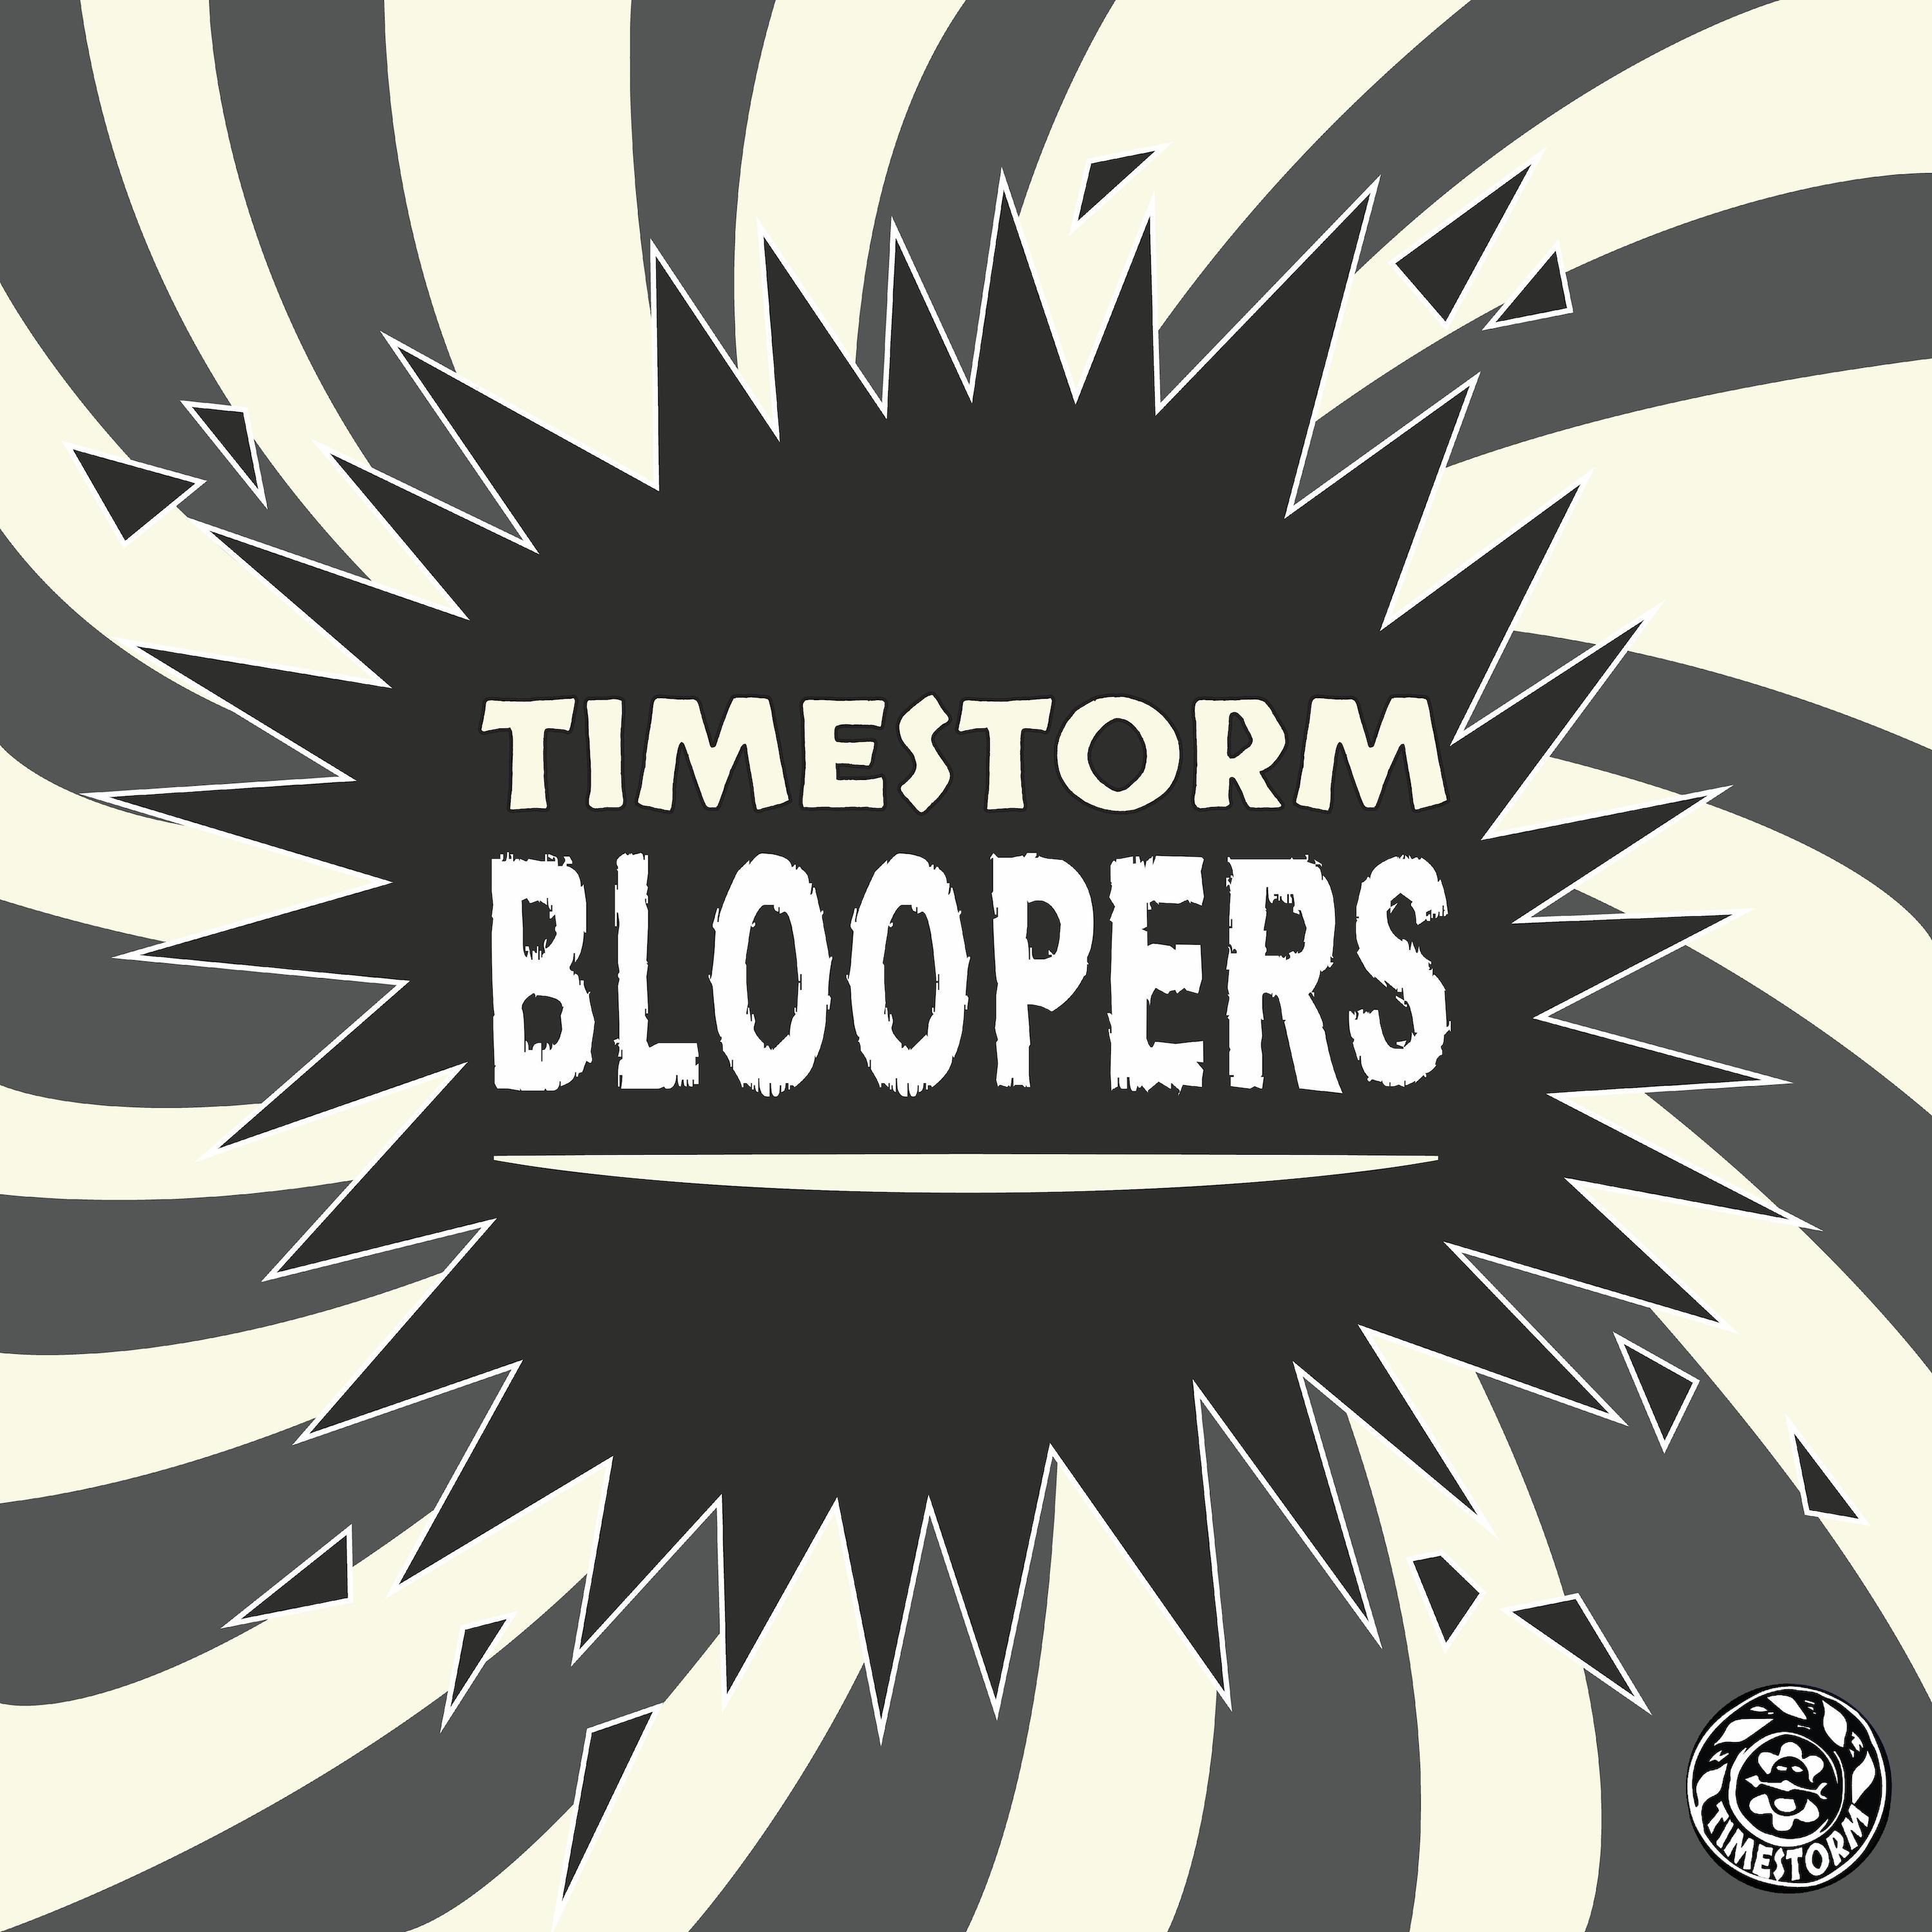 Thumbnail for "Bonus: Timestorm Bloopers".